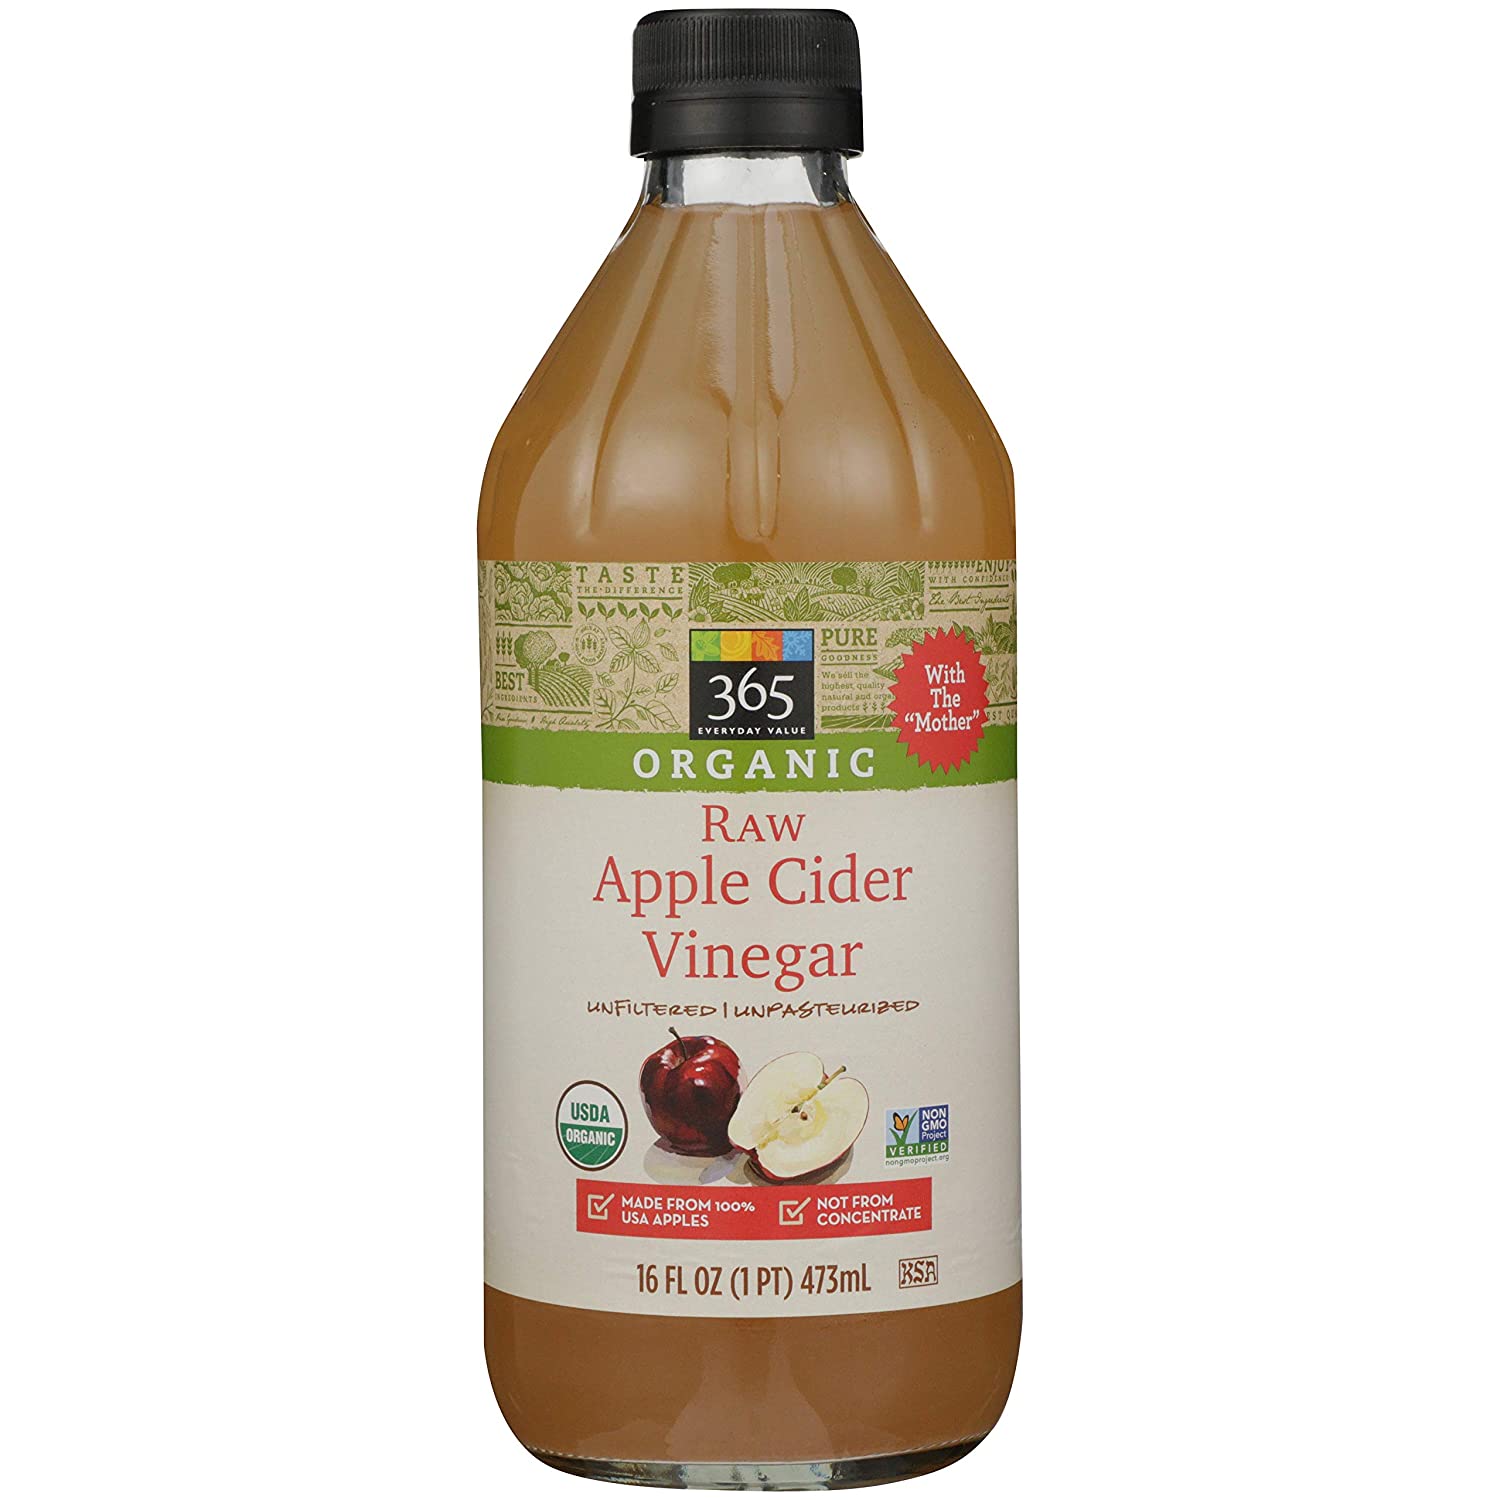 8. 365 Everyday Value Organic Raw Apple Cider Vinegar